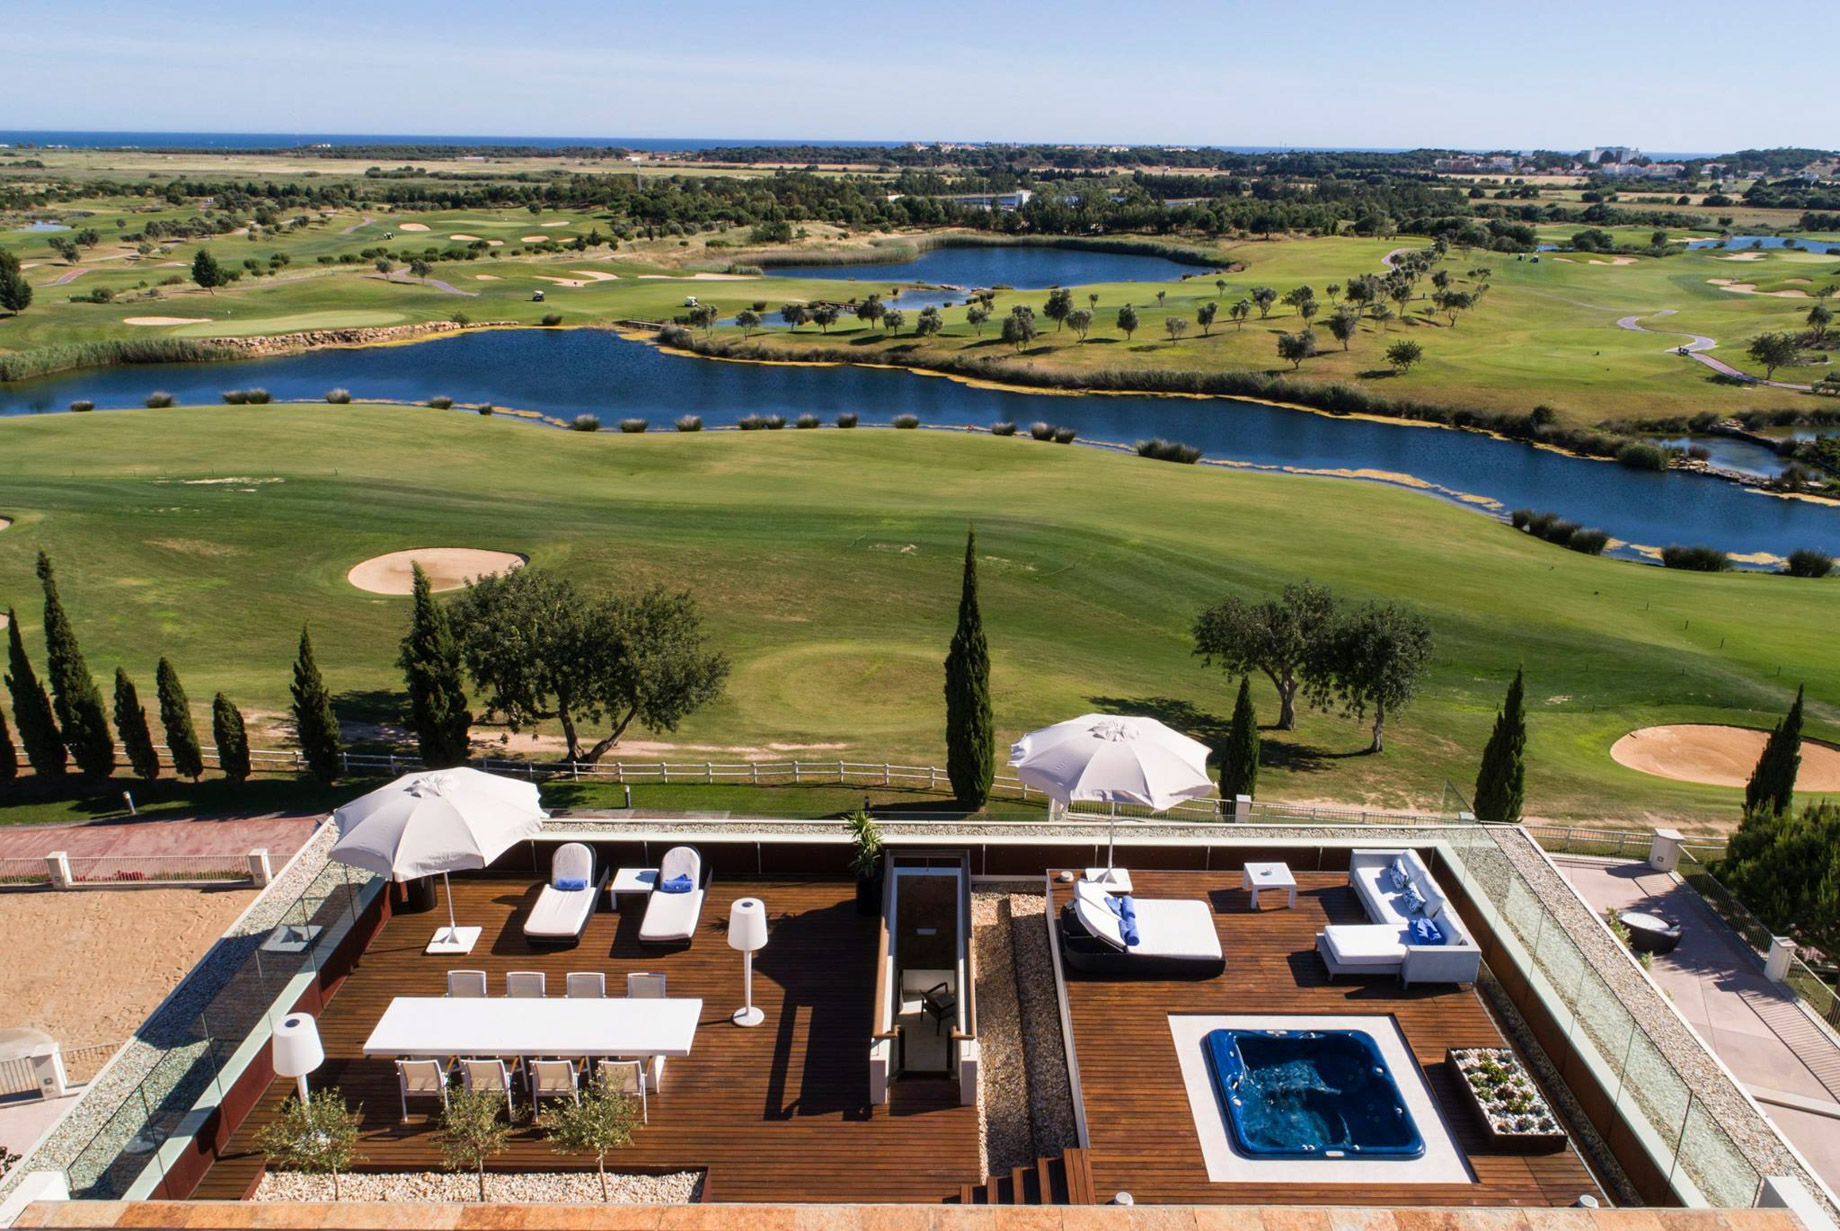 Anantara Vilamoura Algarve Resort – Portugal – Presidential Suite View